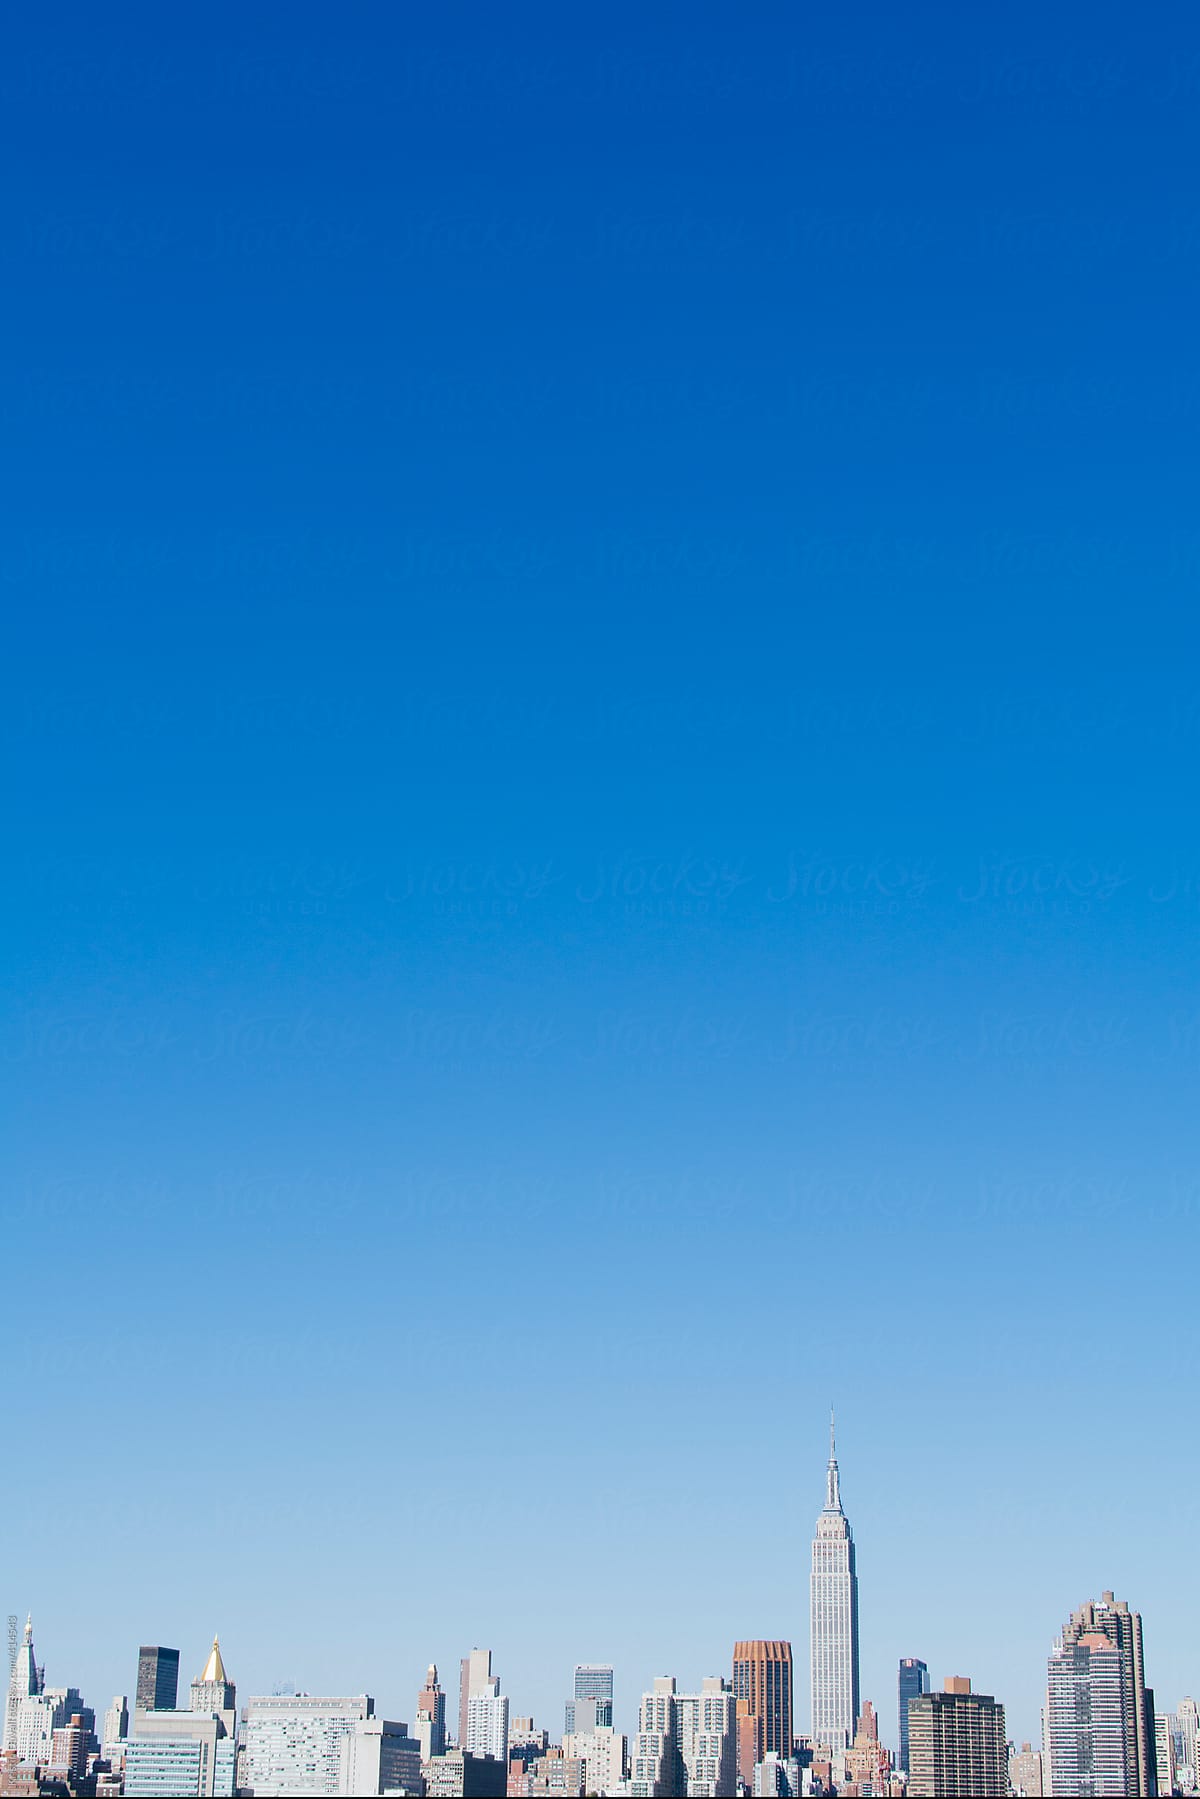 New York City skyline with blue sky